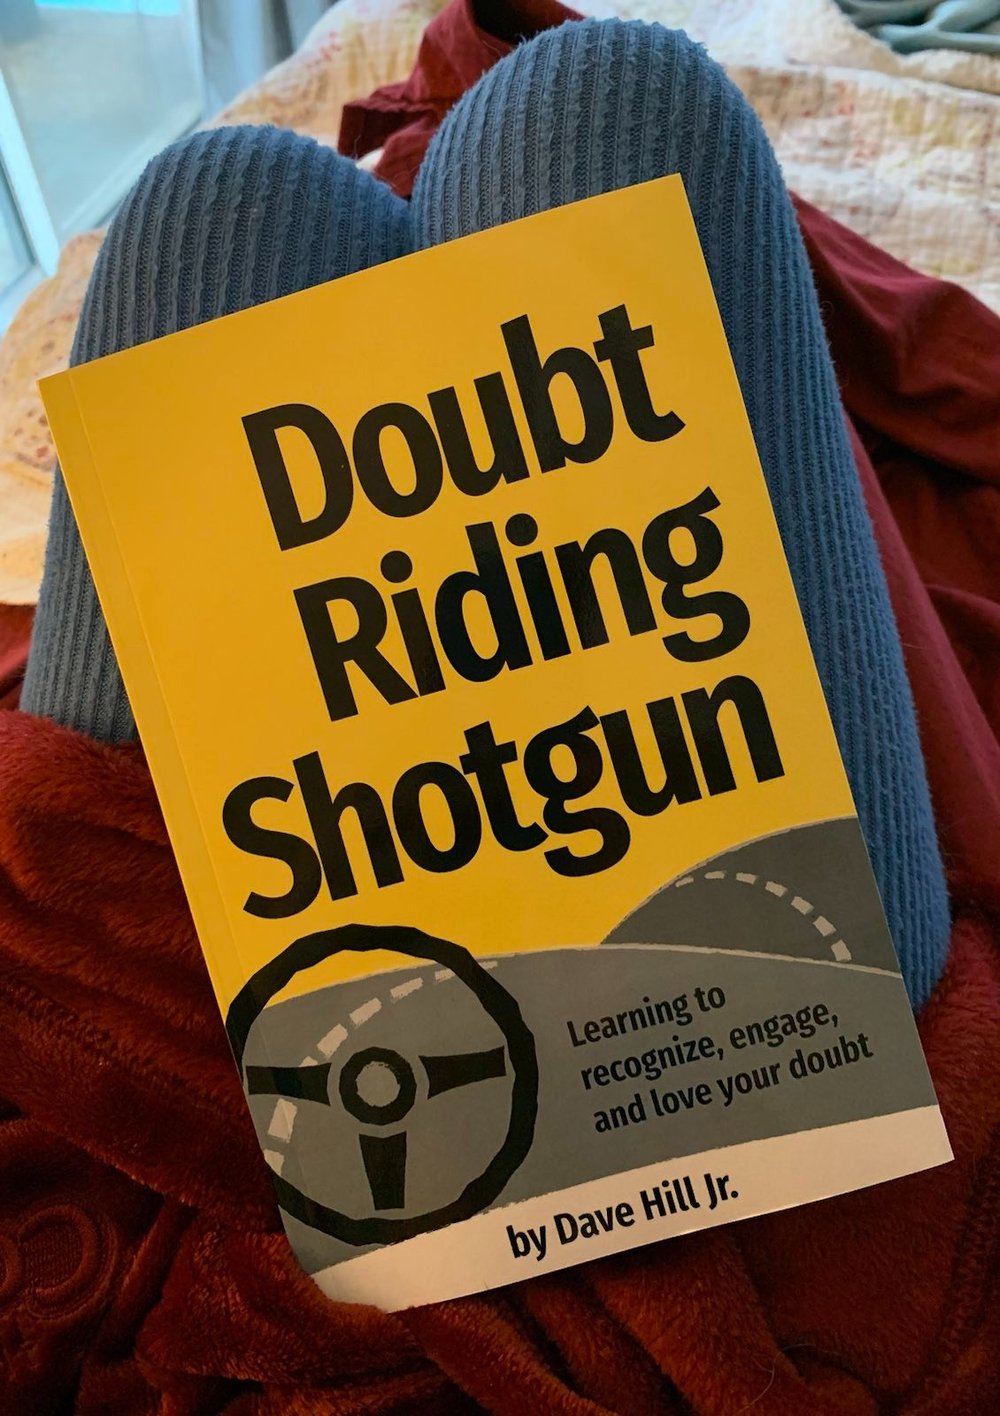 Curling-up-withDoubt_Riding_Shotgun_book.jpg